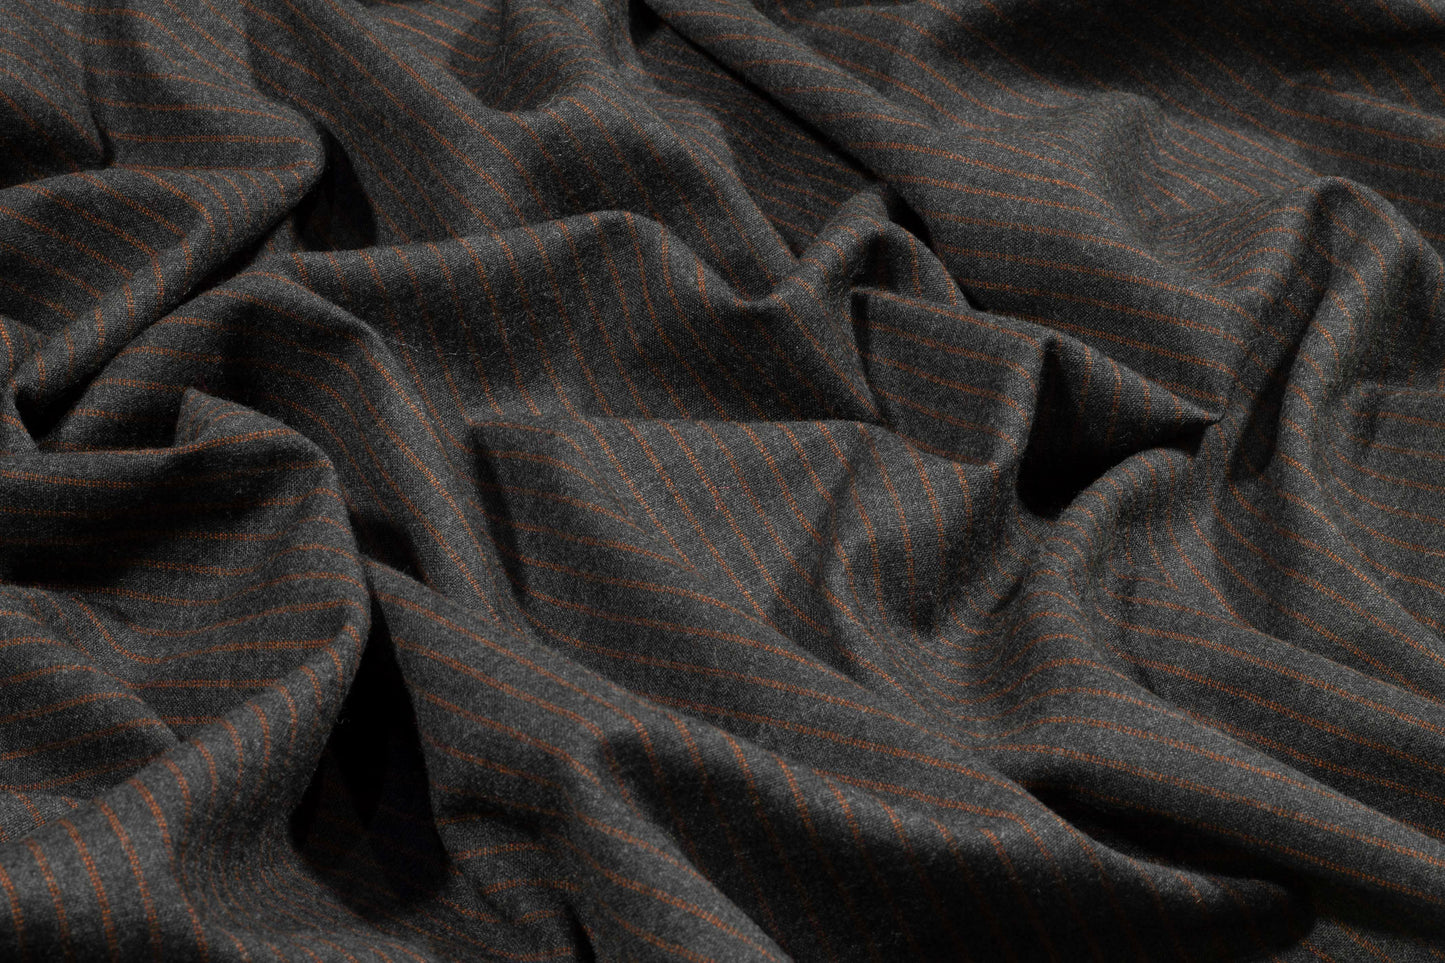 Pin Striped Italian Wool Suiting - Charcoal Gray and Burned Orange - Prime Fabrics